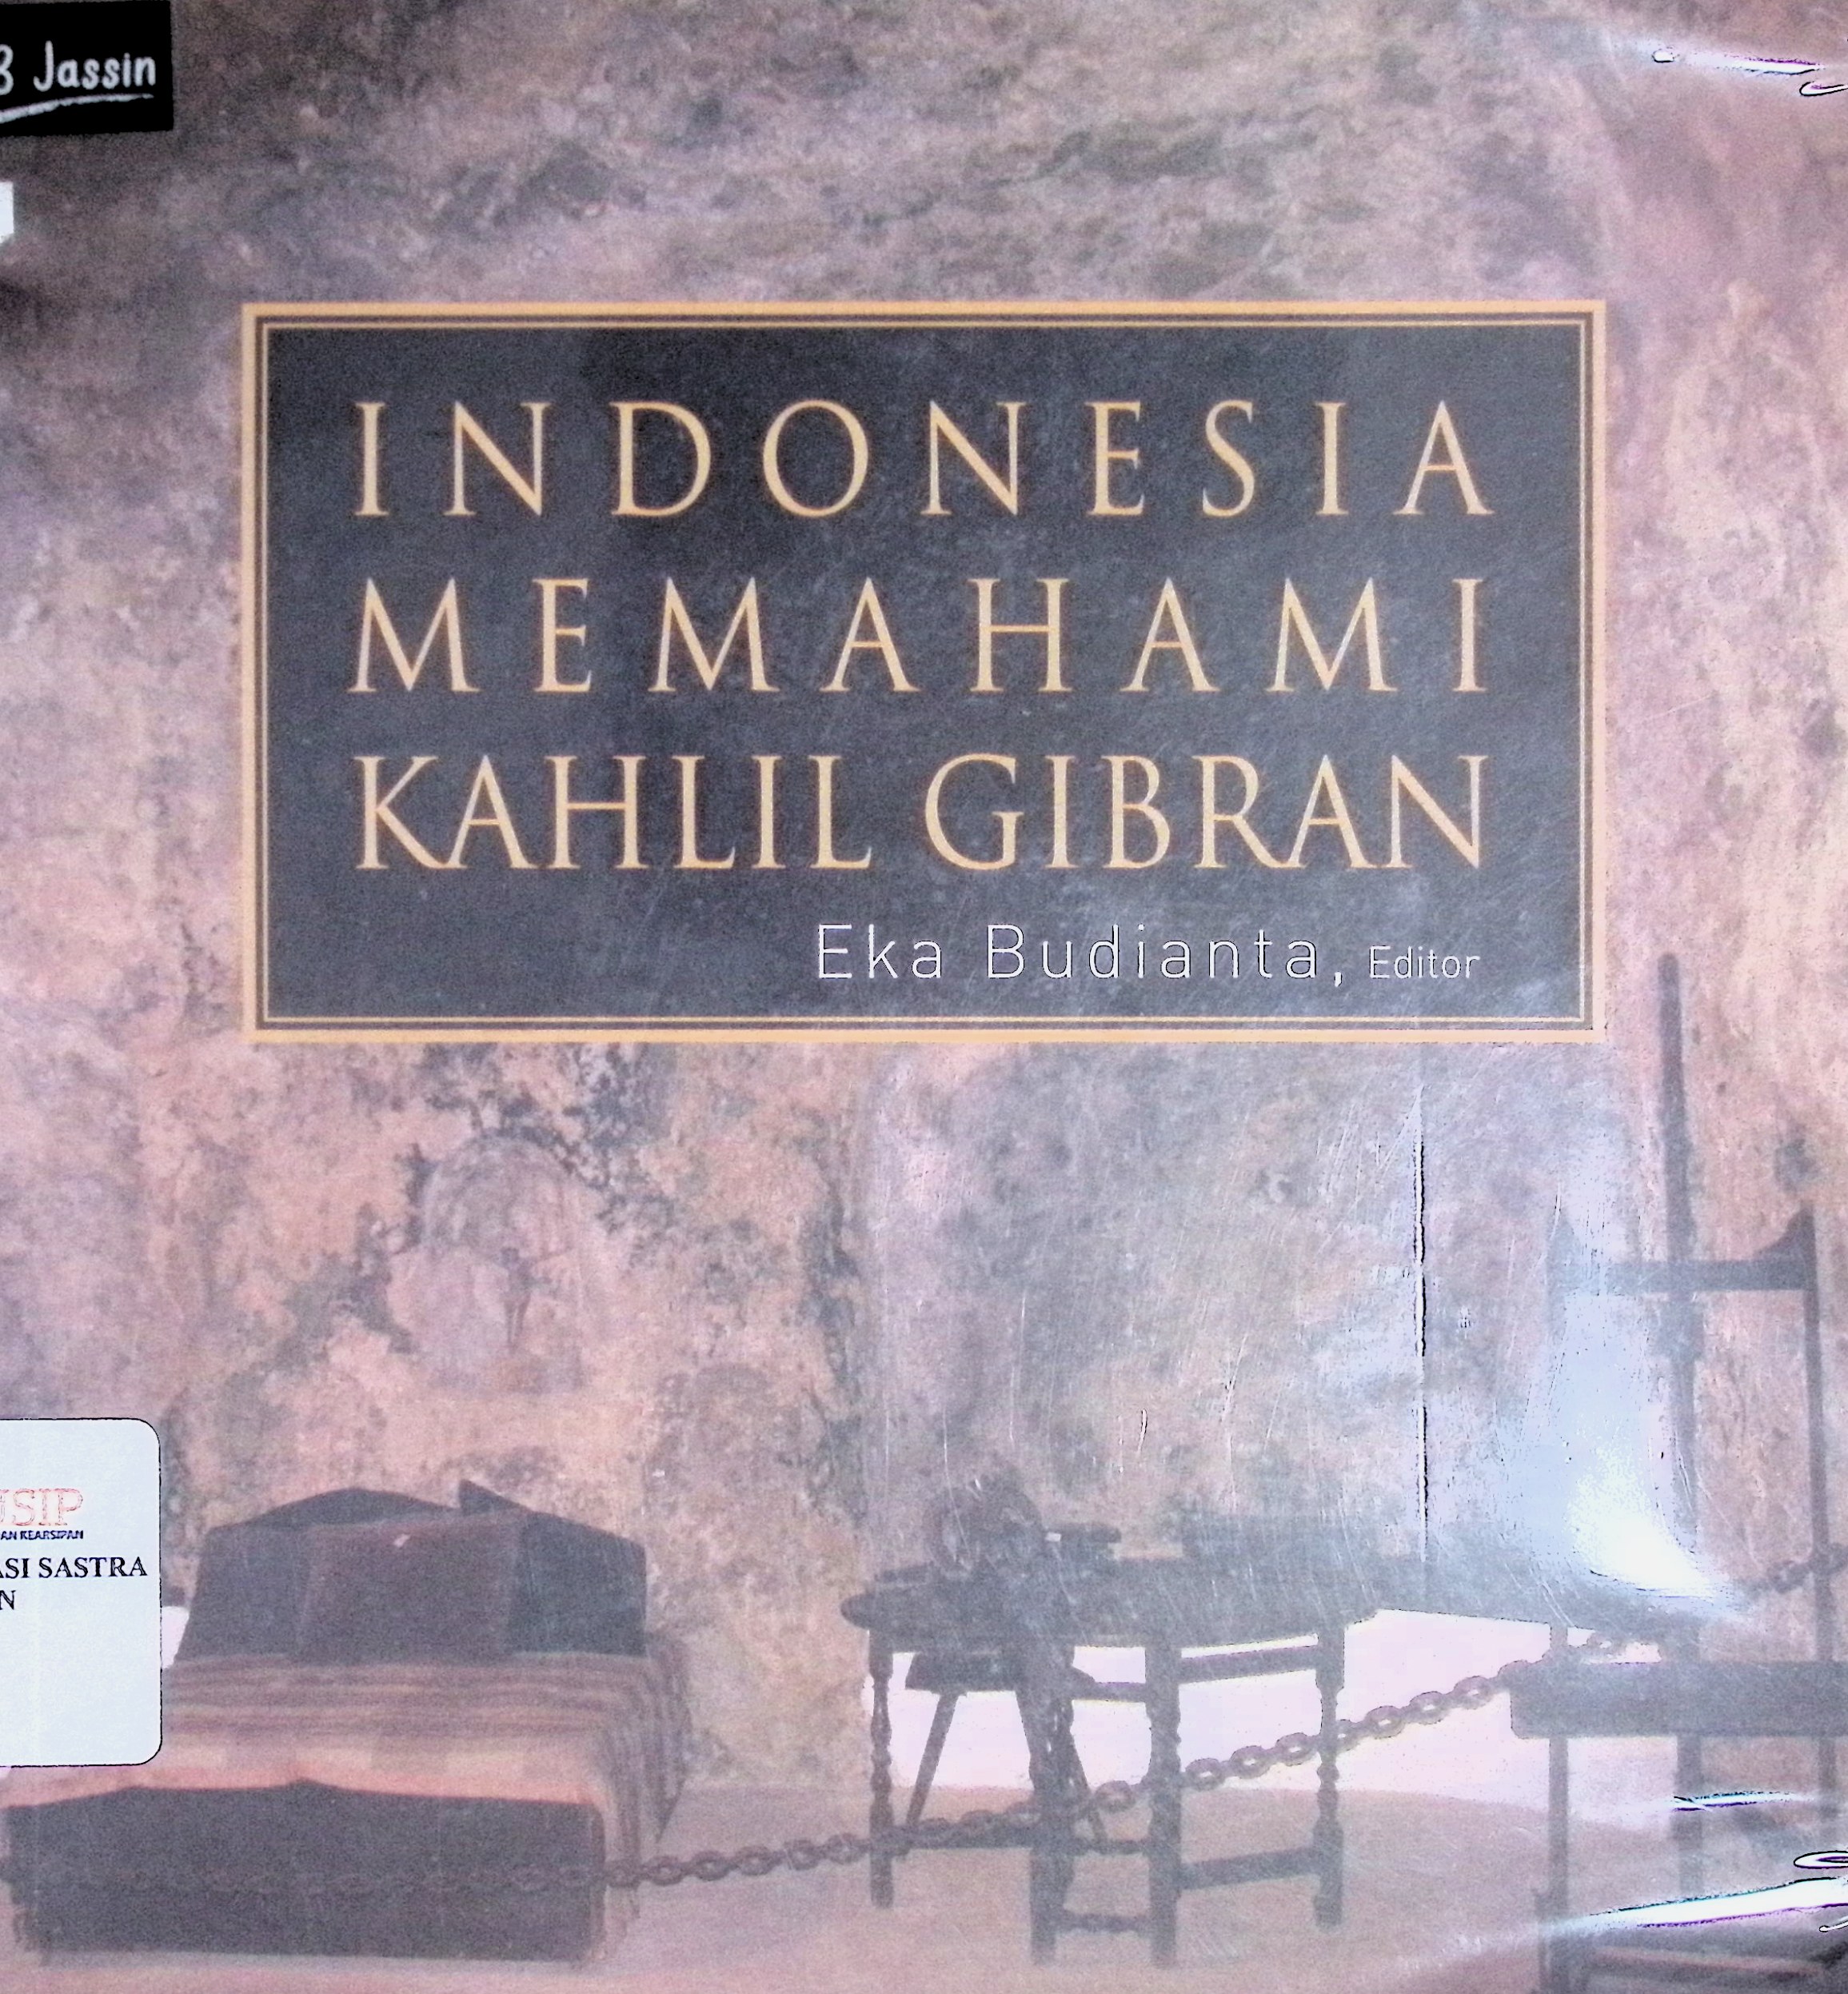 Indonesia memahami Kahlil Gibran